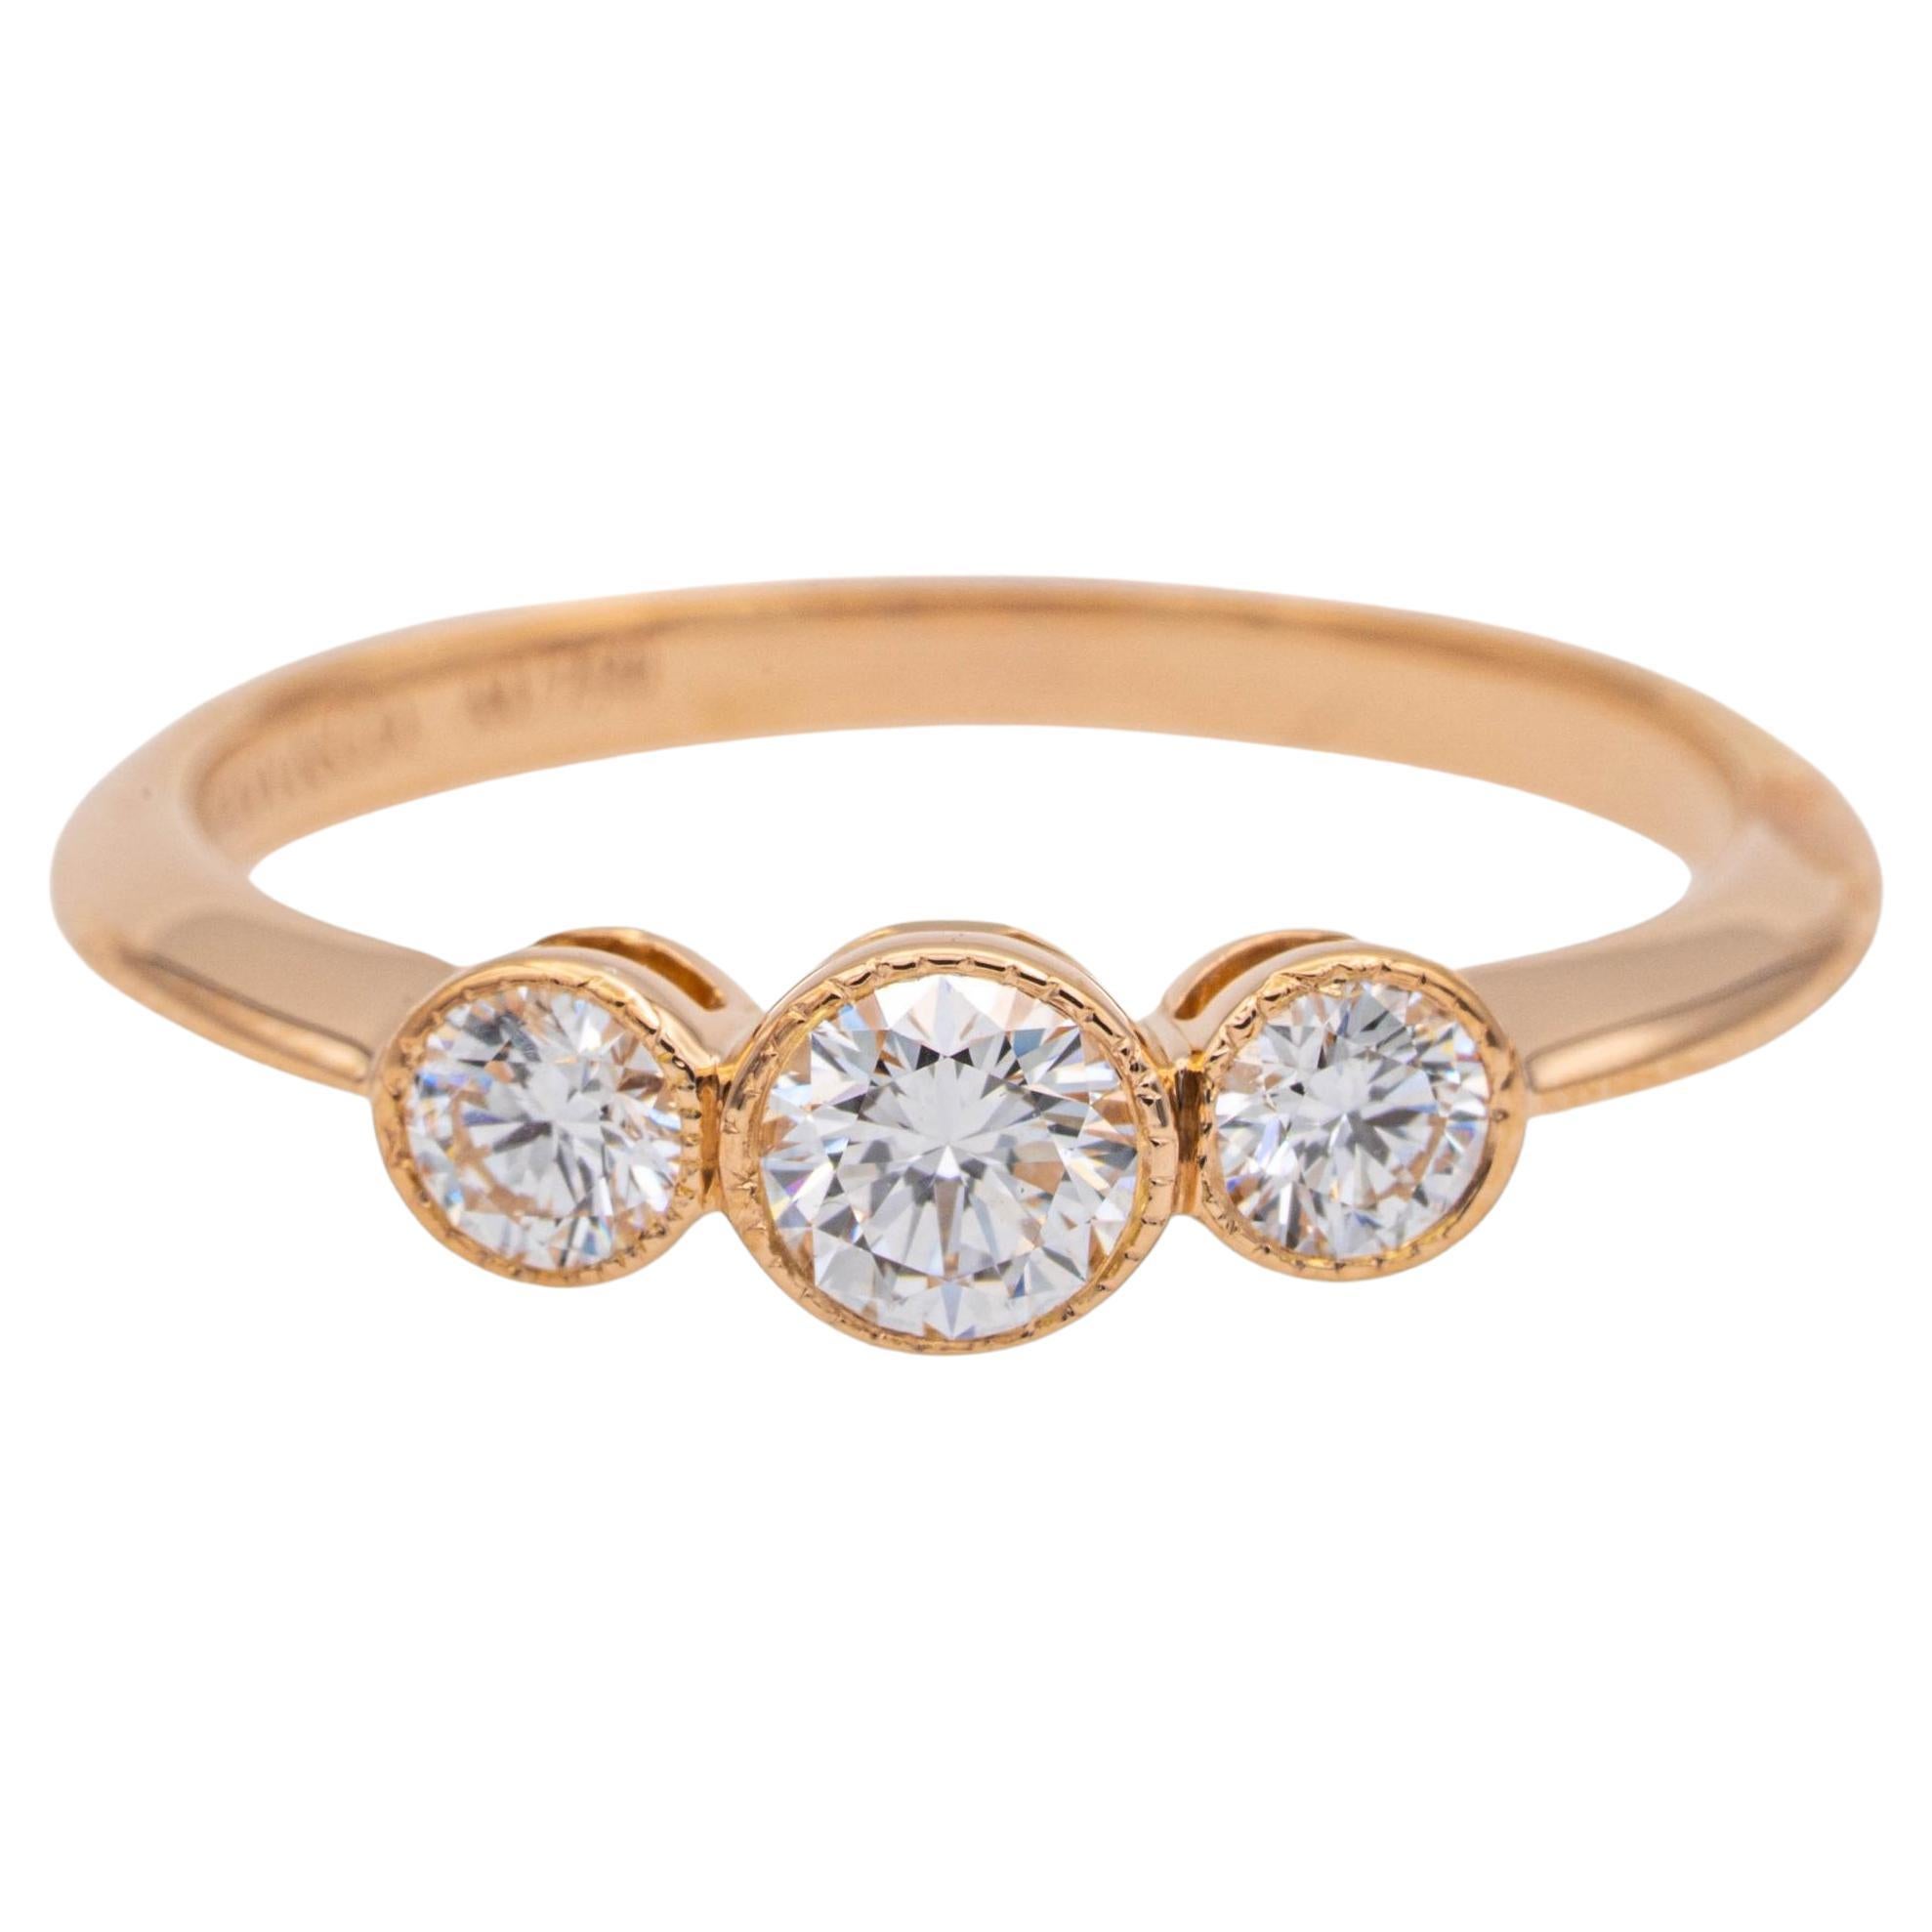 Tiffany & Co. 3 Stone 18K Rose Gold Bezels Diamond Ring 0.29 Cts. Total GVVS2